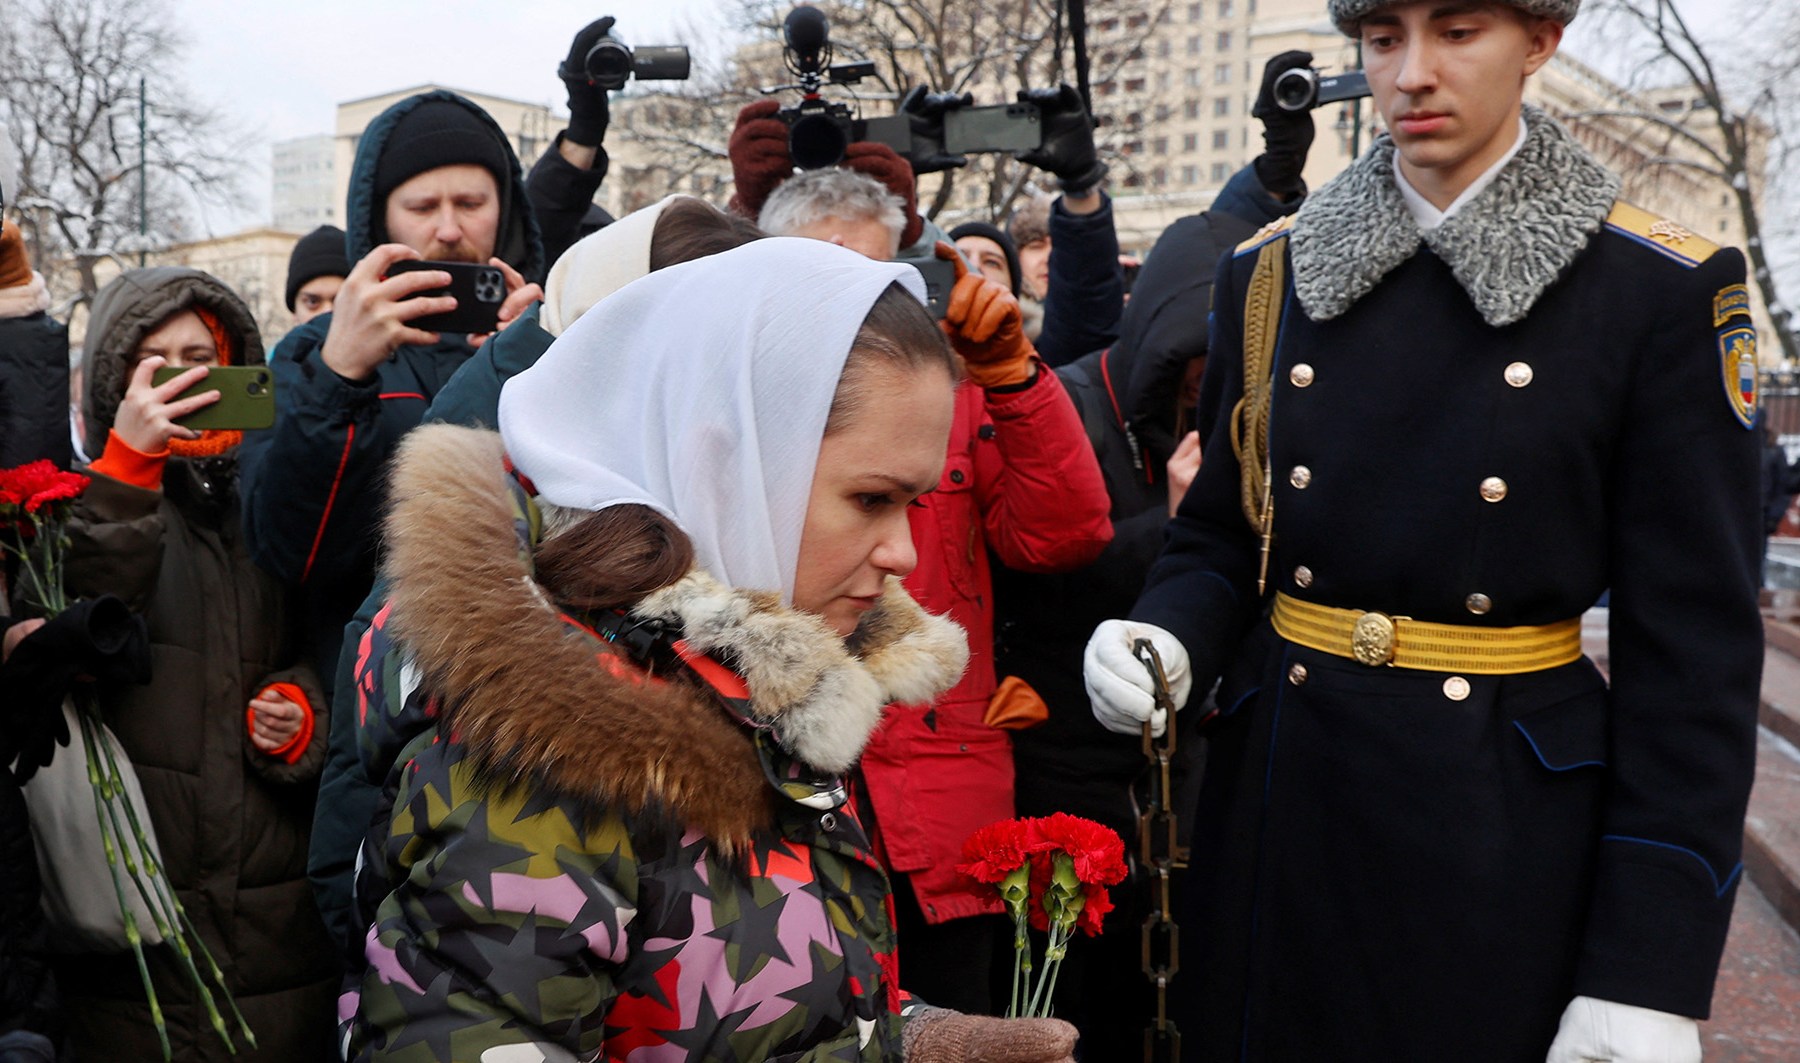 Russian wives demand return of reservist husbands fighting in Ukraine | The World Wars